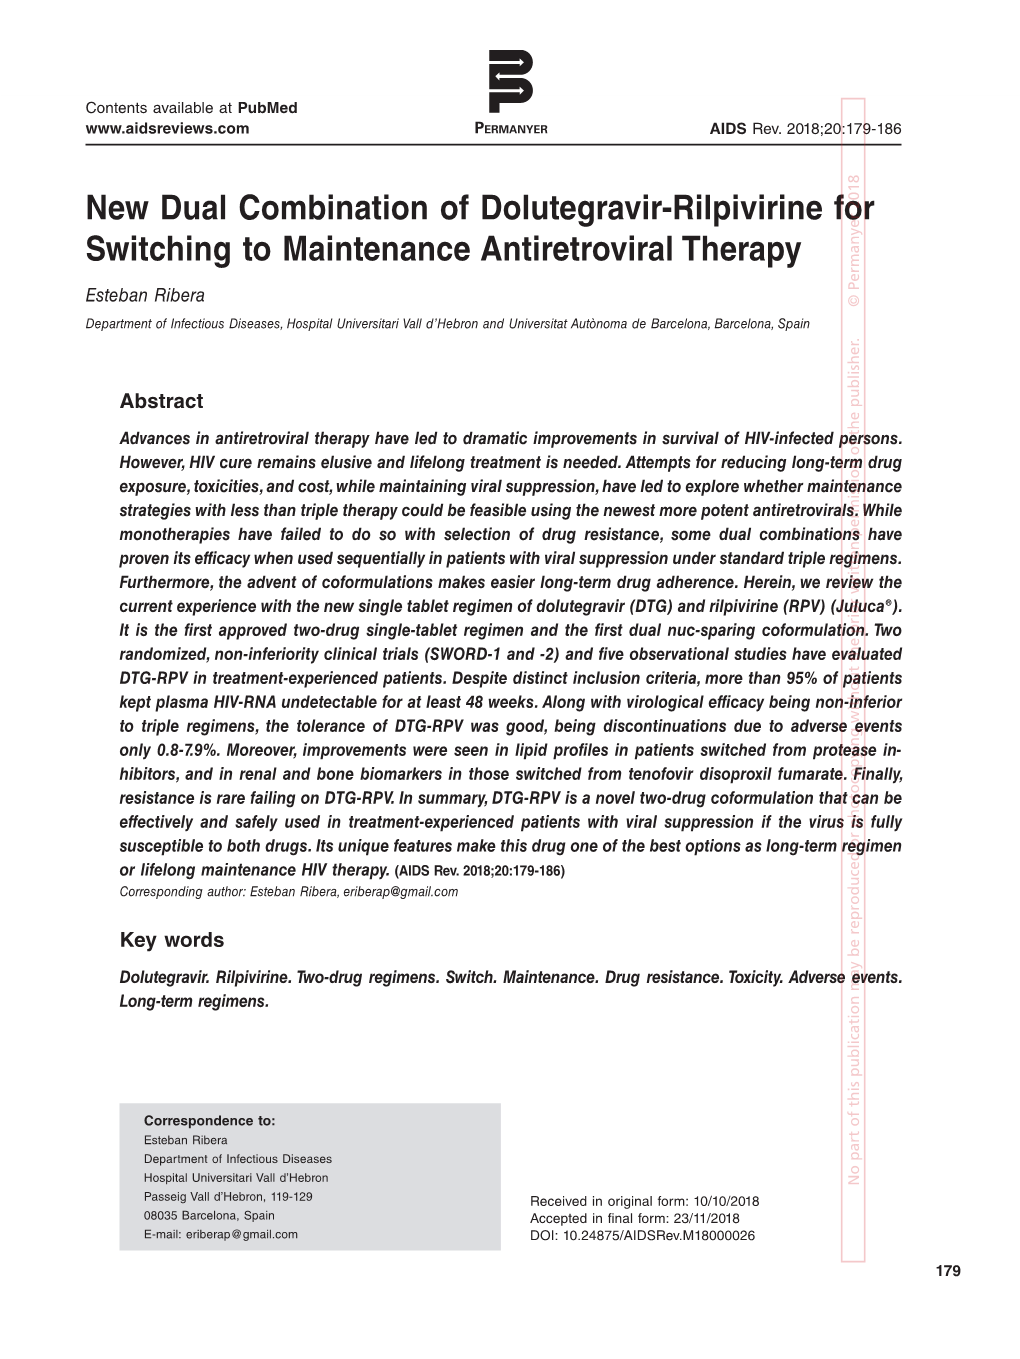 New Dual Combination of Dolutegravir-Rilpivirine For